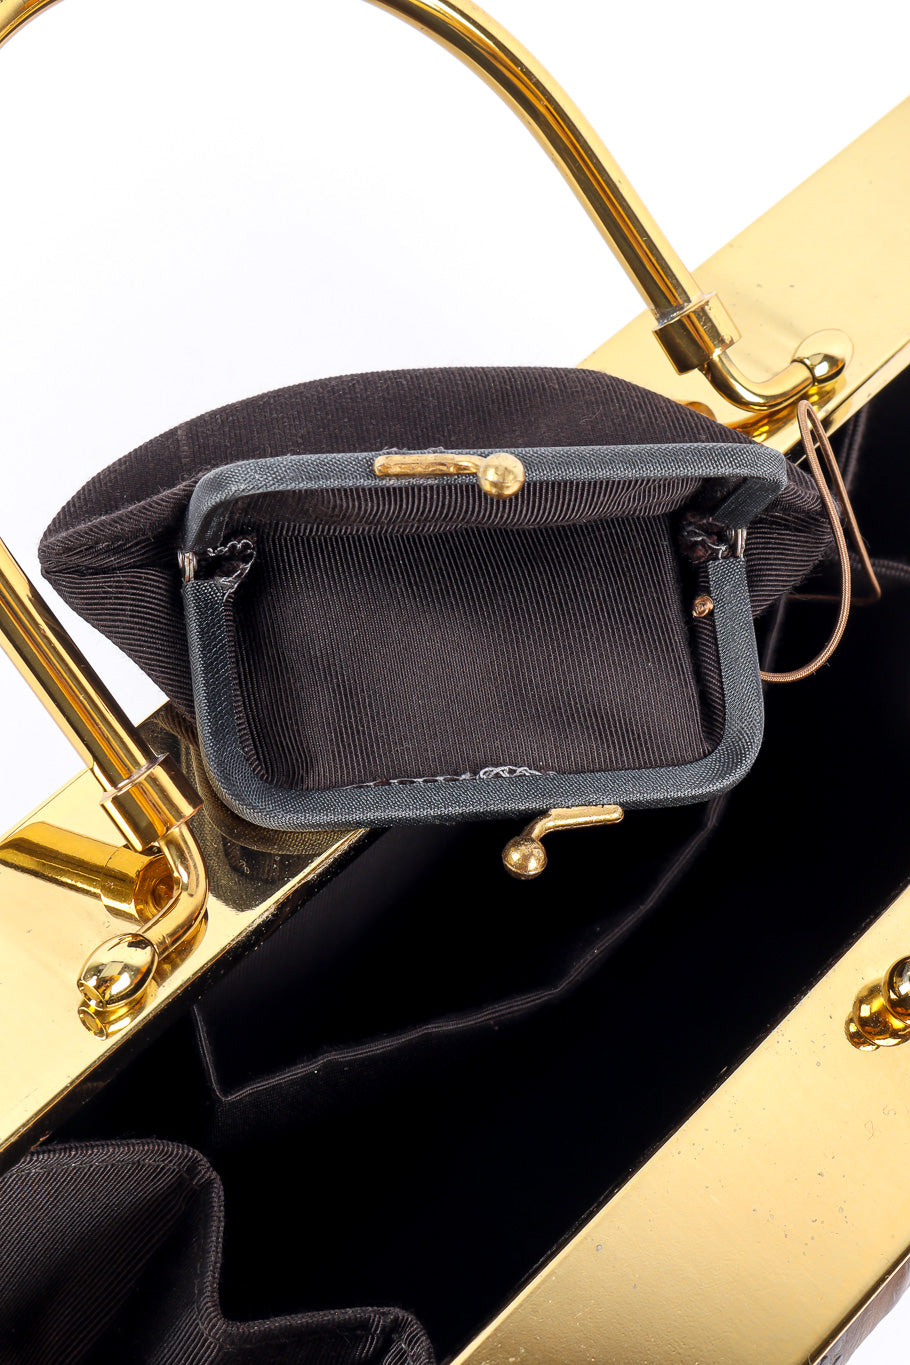 Lou Taylor gold frame box purse attached coin purse detail @recessla